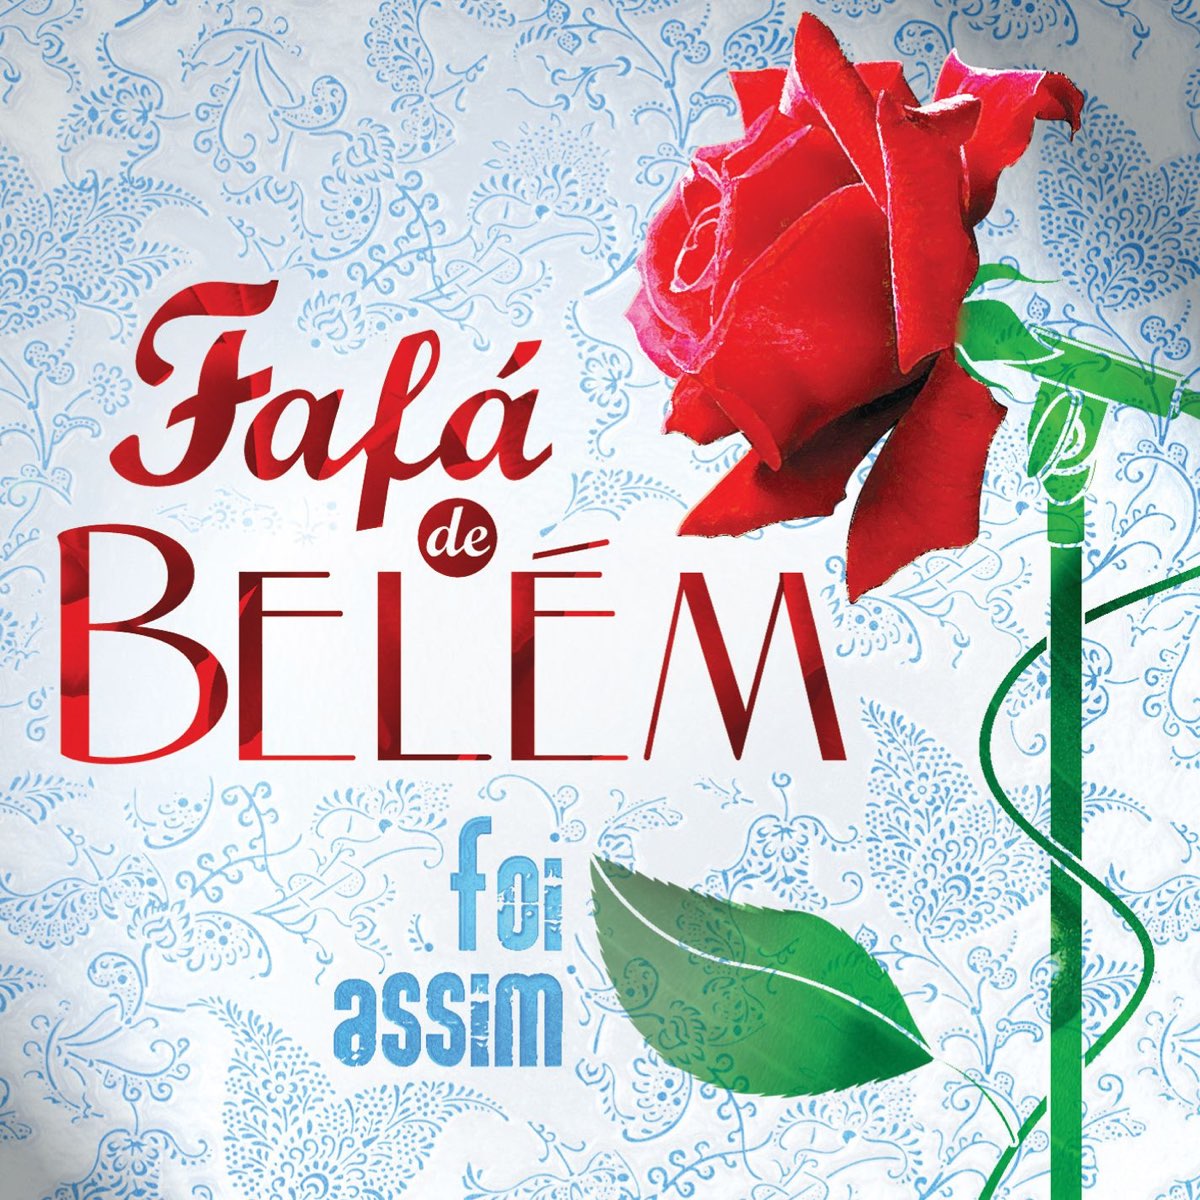 Foi Assim - Album by Fafá de Belém - Apple Music